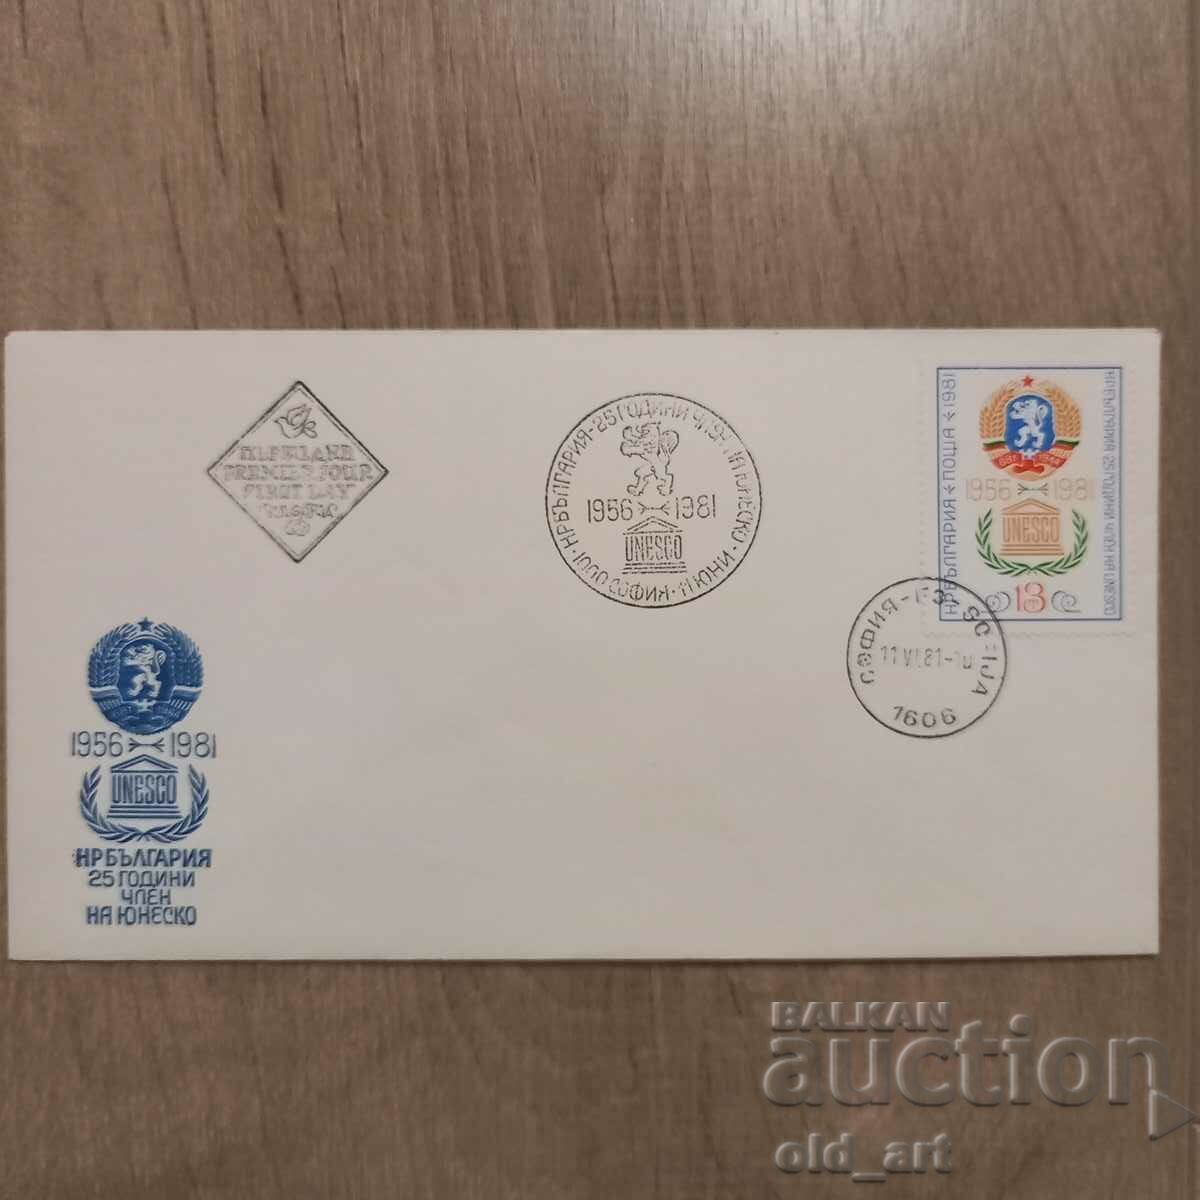 Plic poștal - Bulgaria 25 de ani membru UNESCO